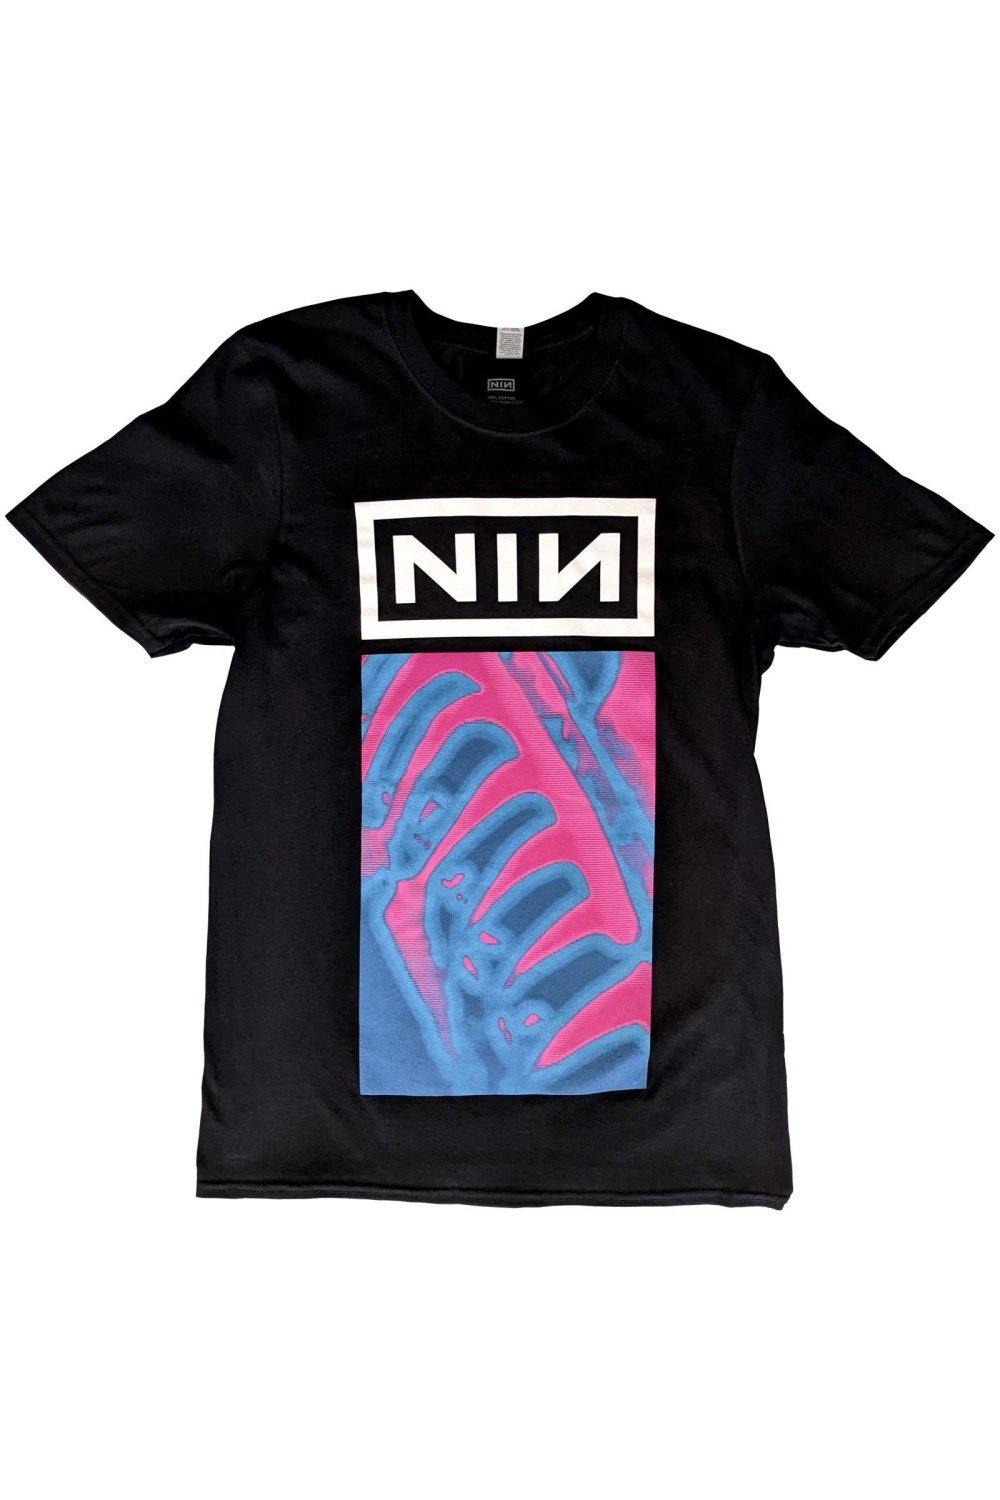 Неоновая хлопковая футболка Pretty Hate Machine Nine Inch Nails, черный футболка pretty hate machine nine inch nails черный